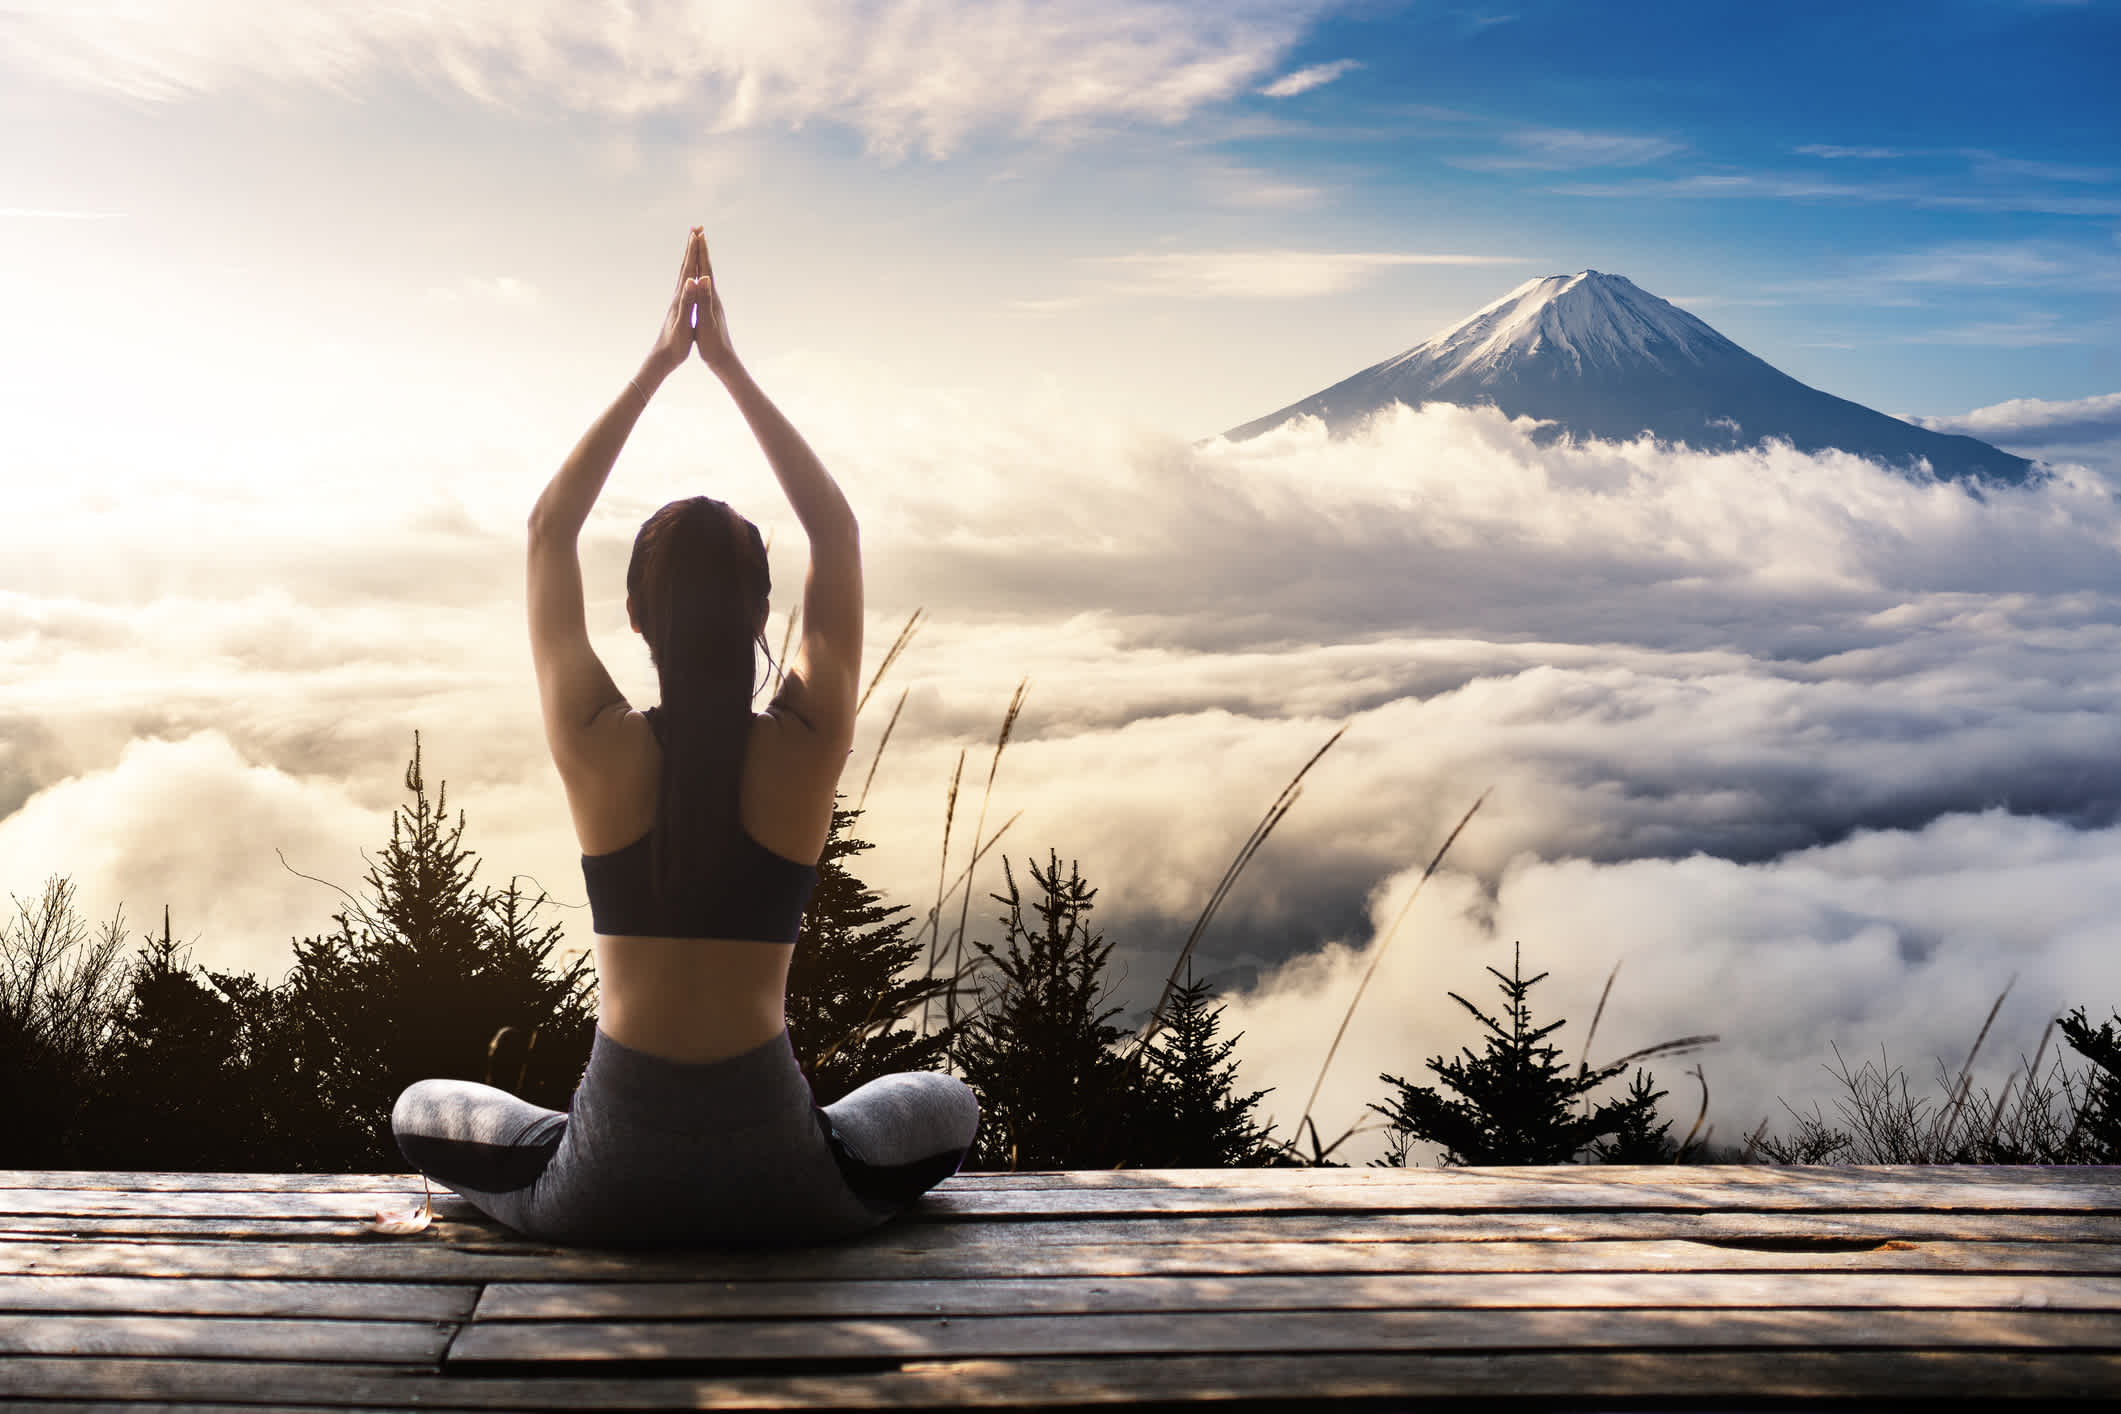 Junge Frau praktiziert Yoga mit dem Blick auf den Berg Fuji, Japan
